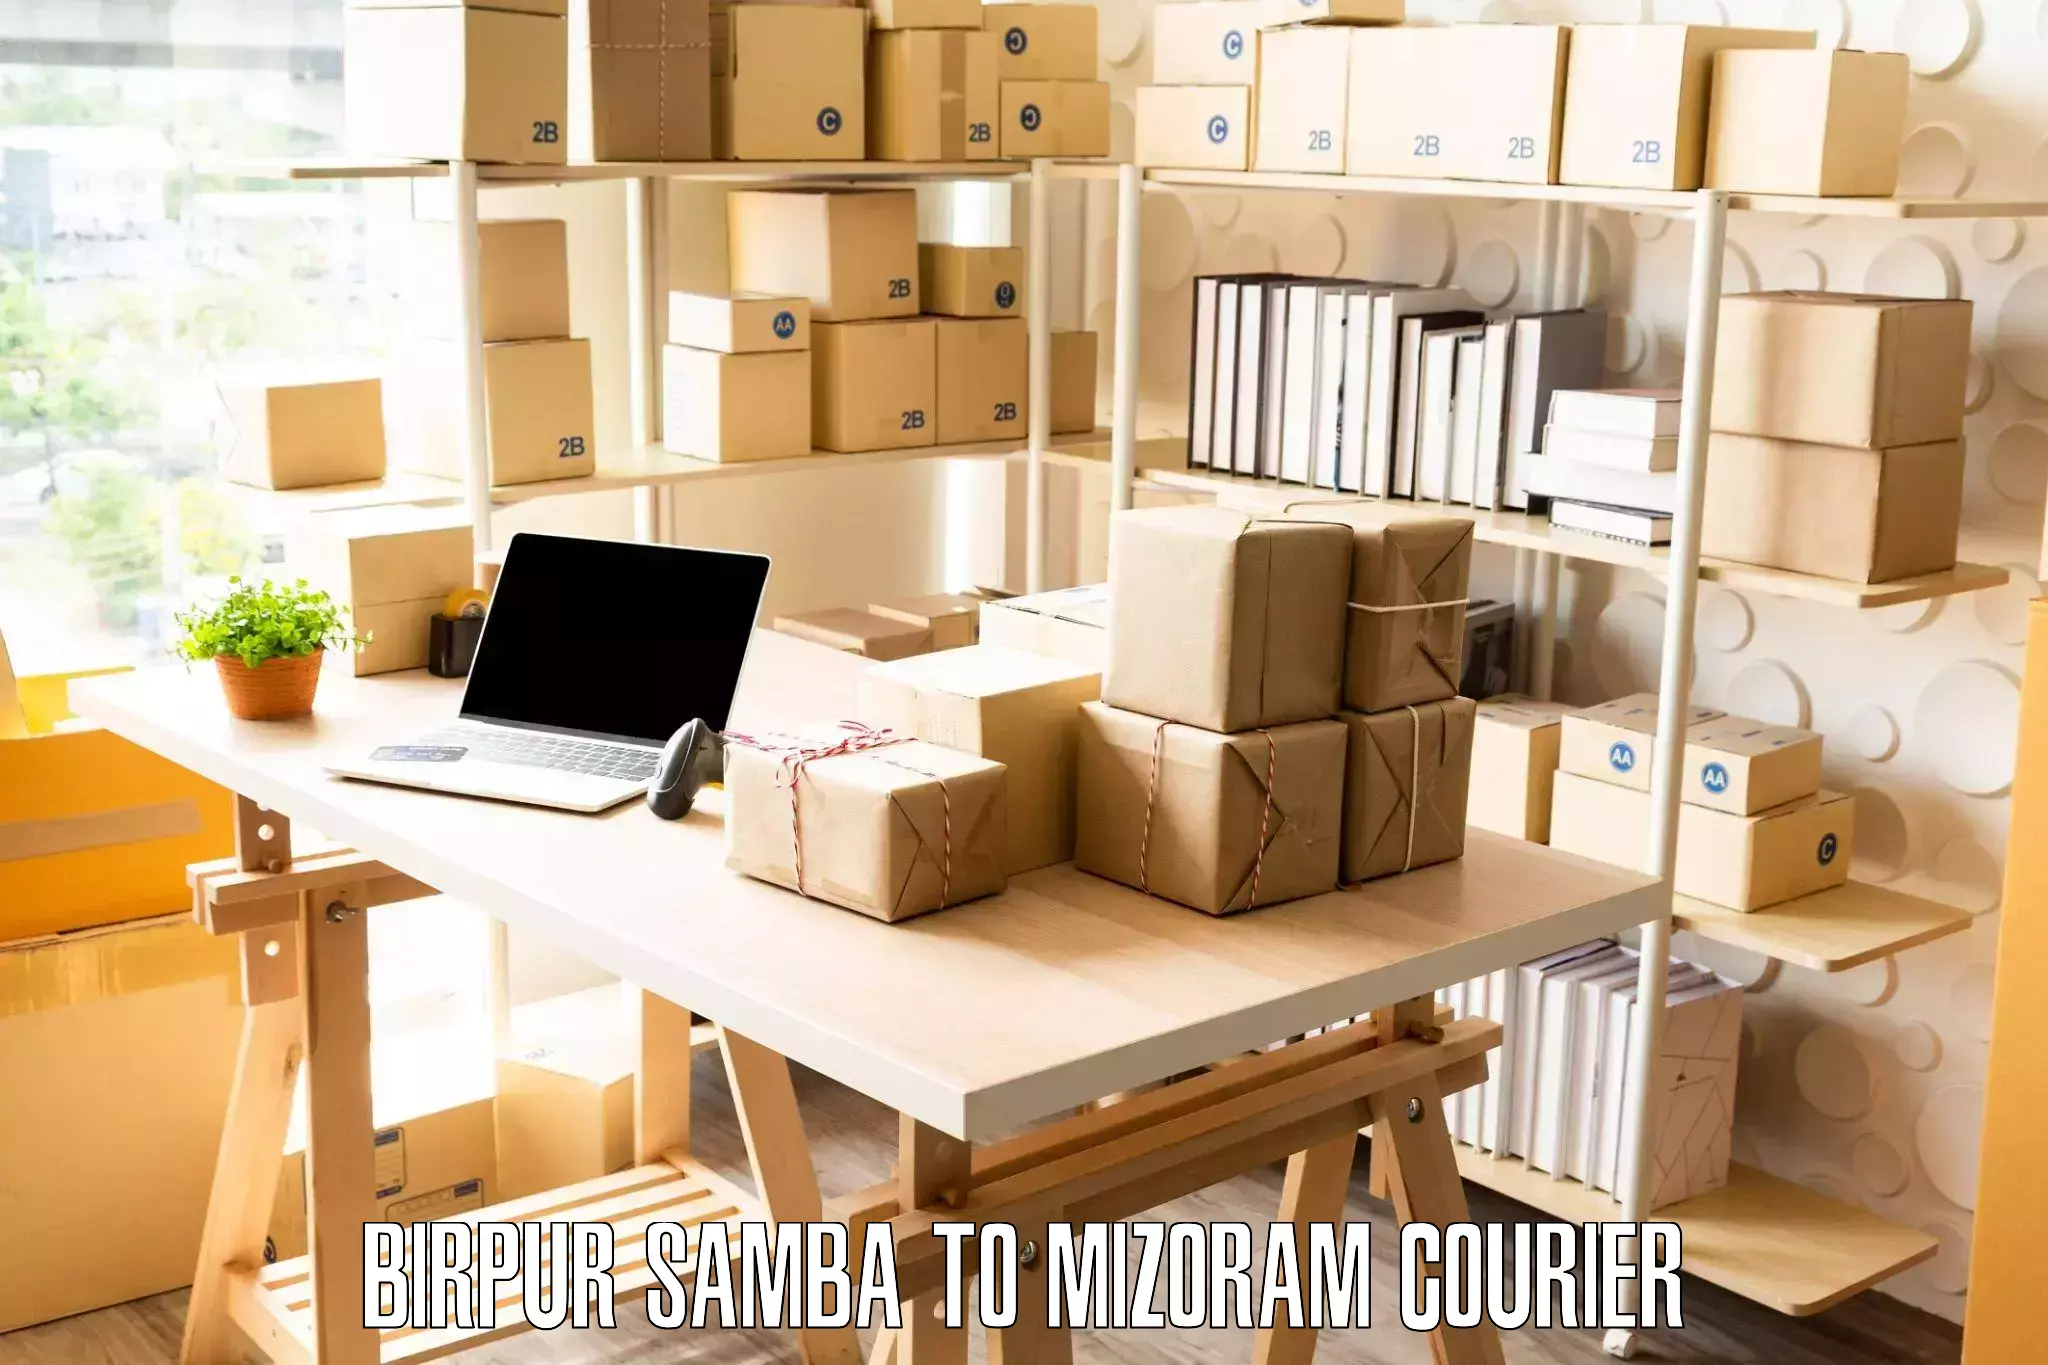 Furniture delivery service Birpur Samba to Mizoram